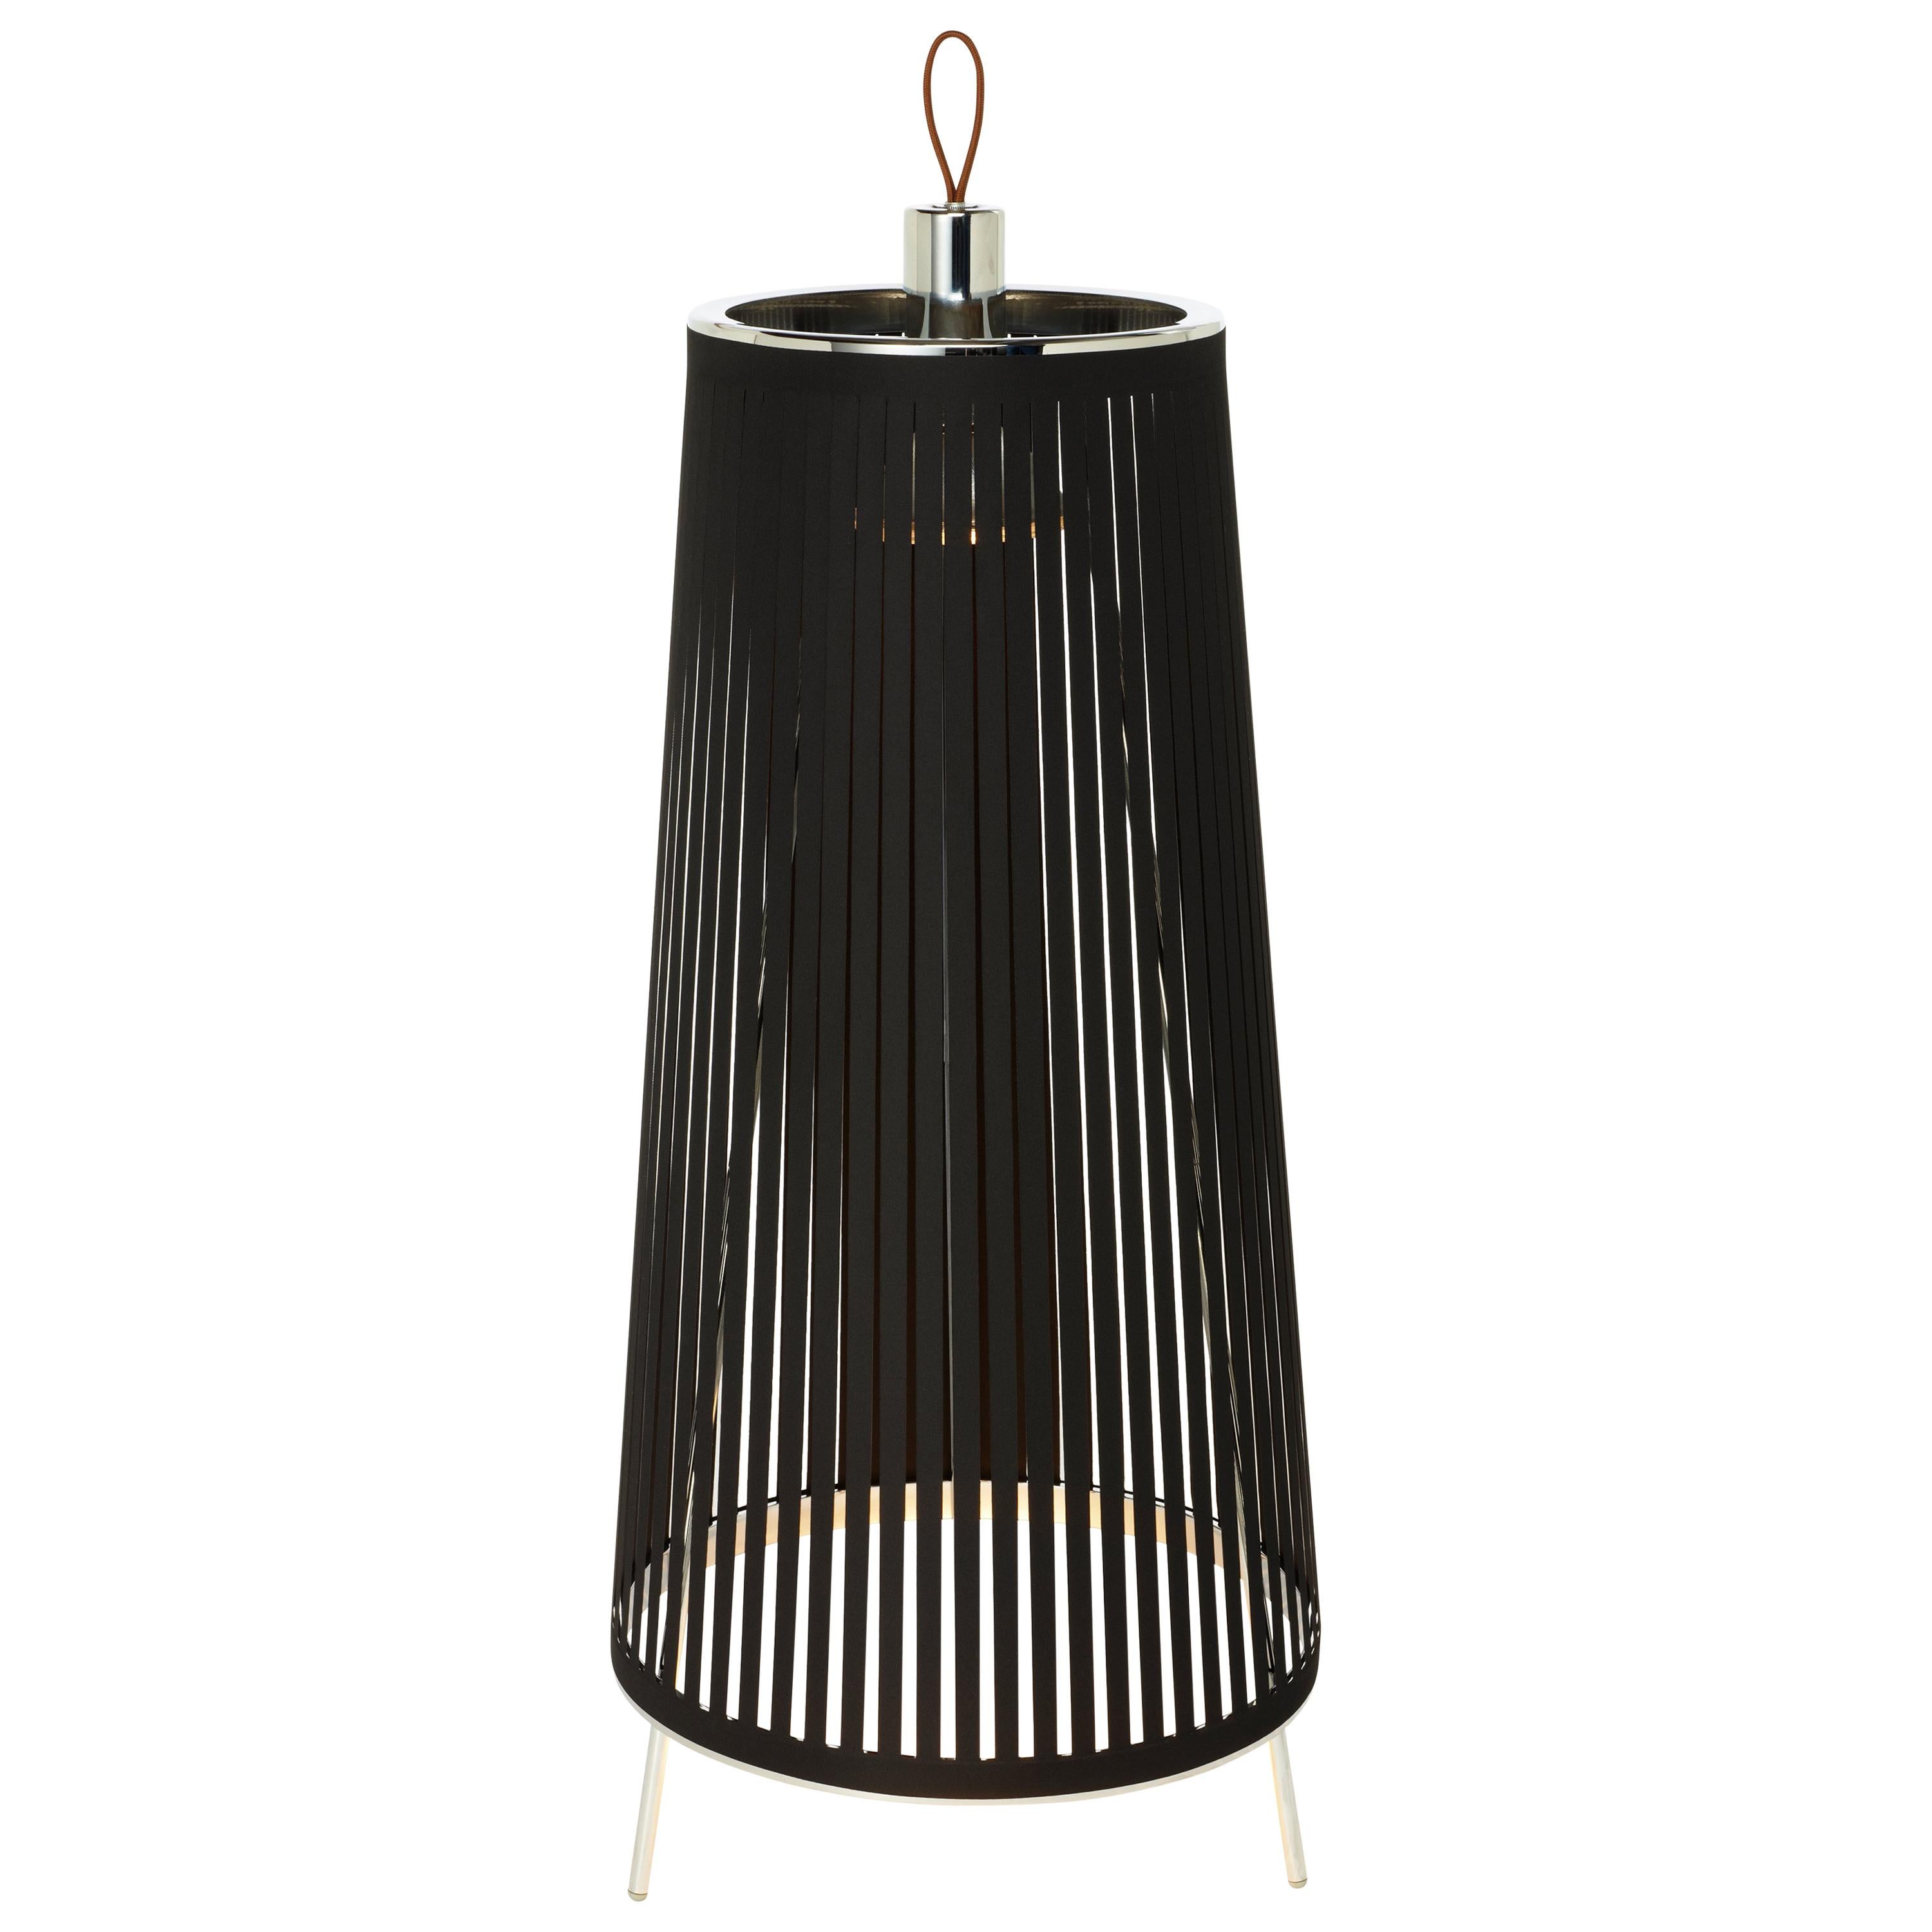 Solis 24 Freestanding Lamp in Black by Pablo Designs